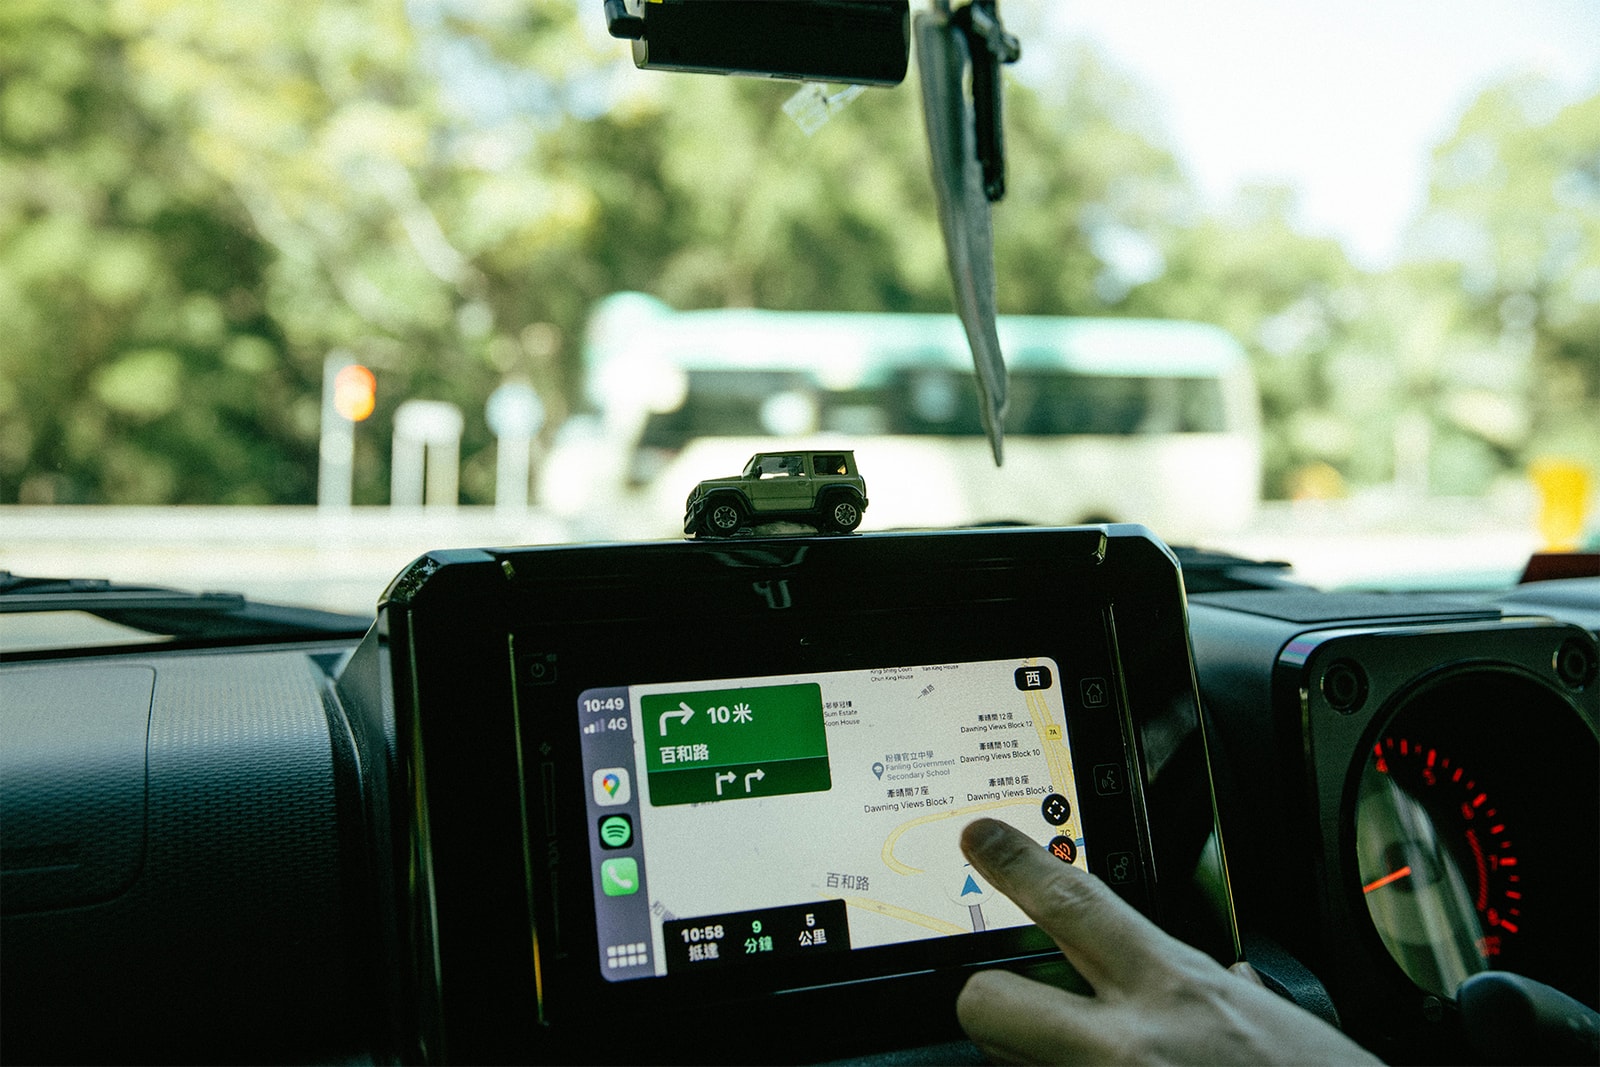 DRIVERS: GOOF 主理人分享 2019 年 Suzuki Jimny Sierra 小型越野車